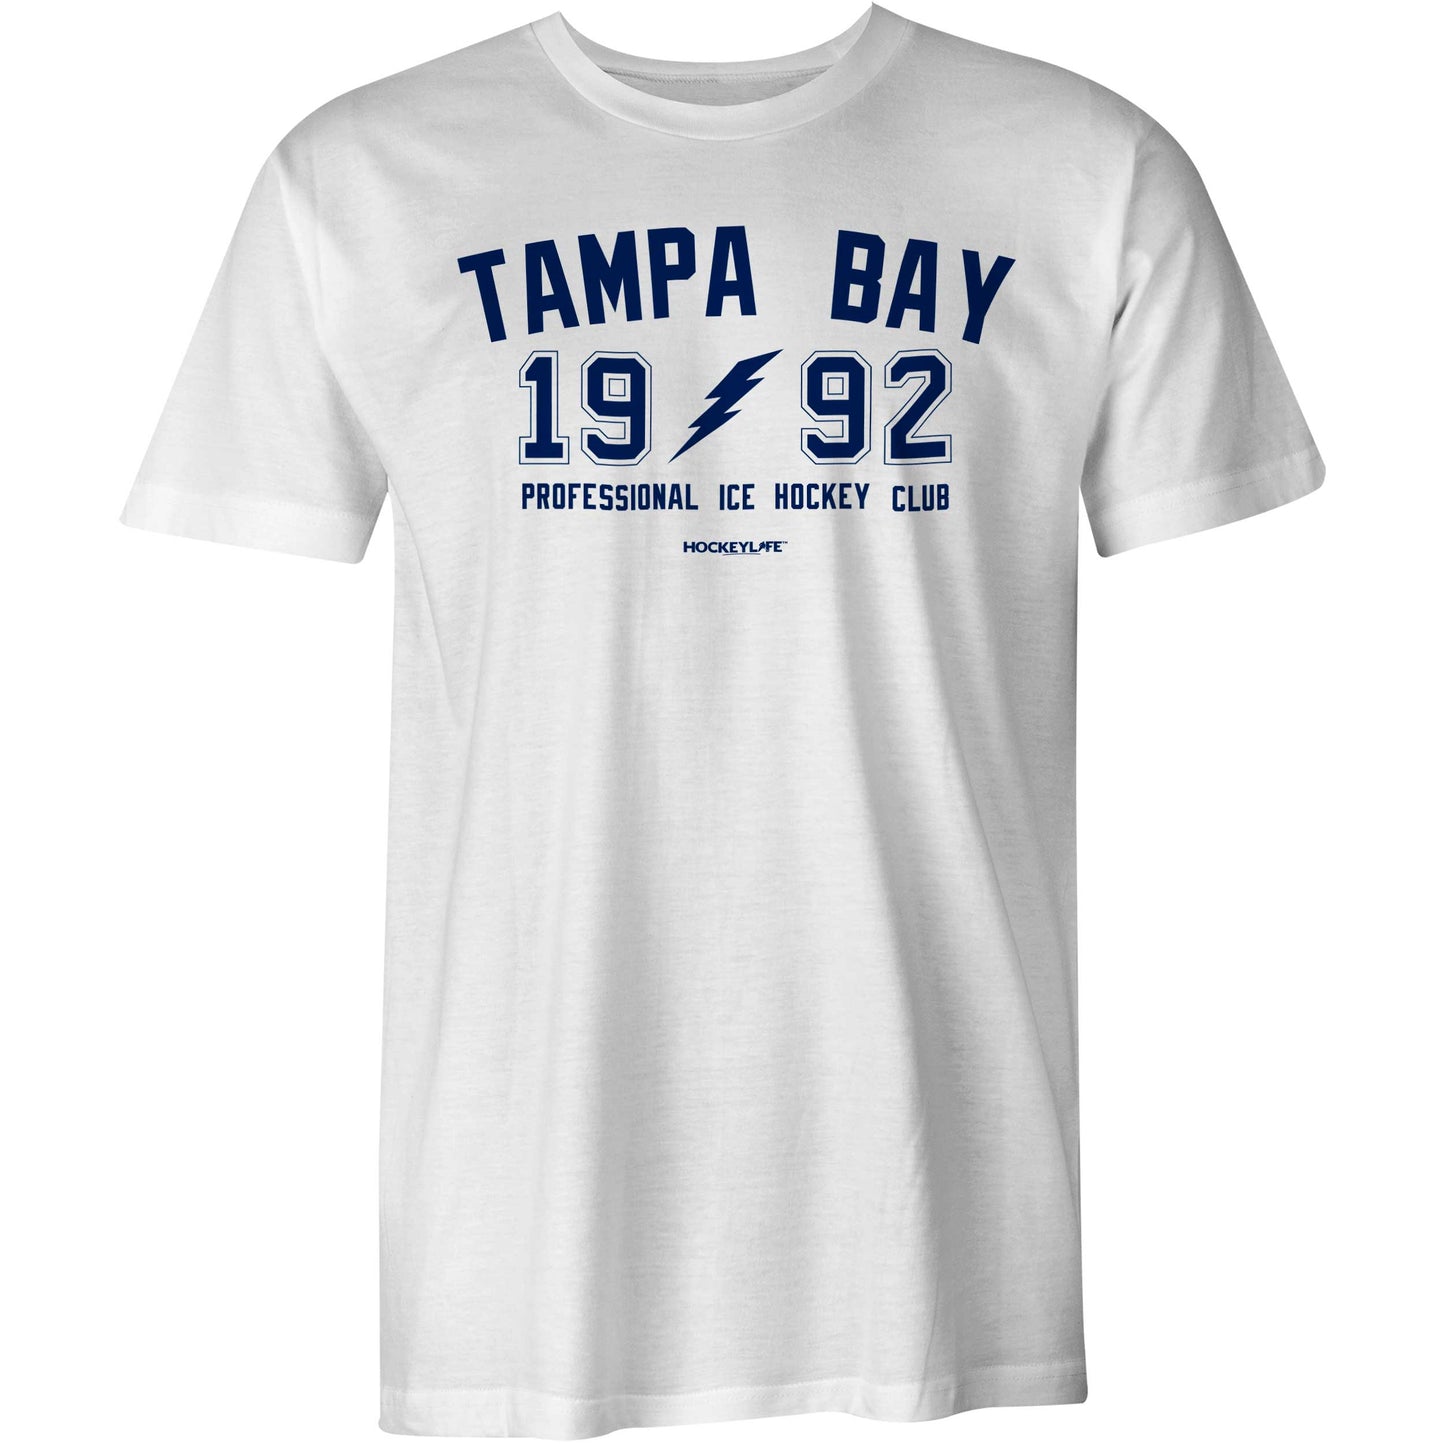 Tampa Bay Professional Hockey Club Tee Shirt (White)